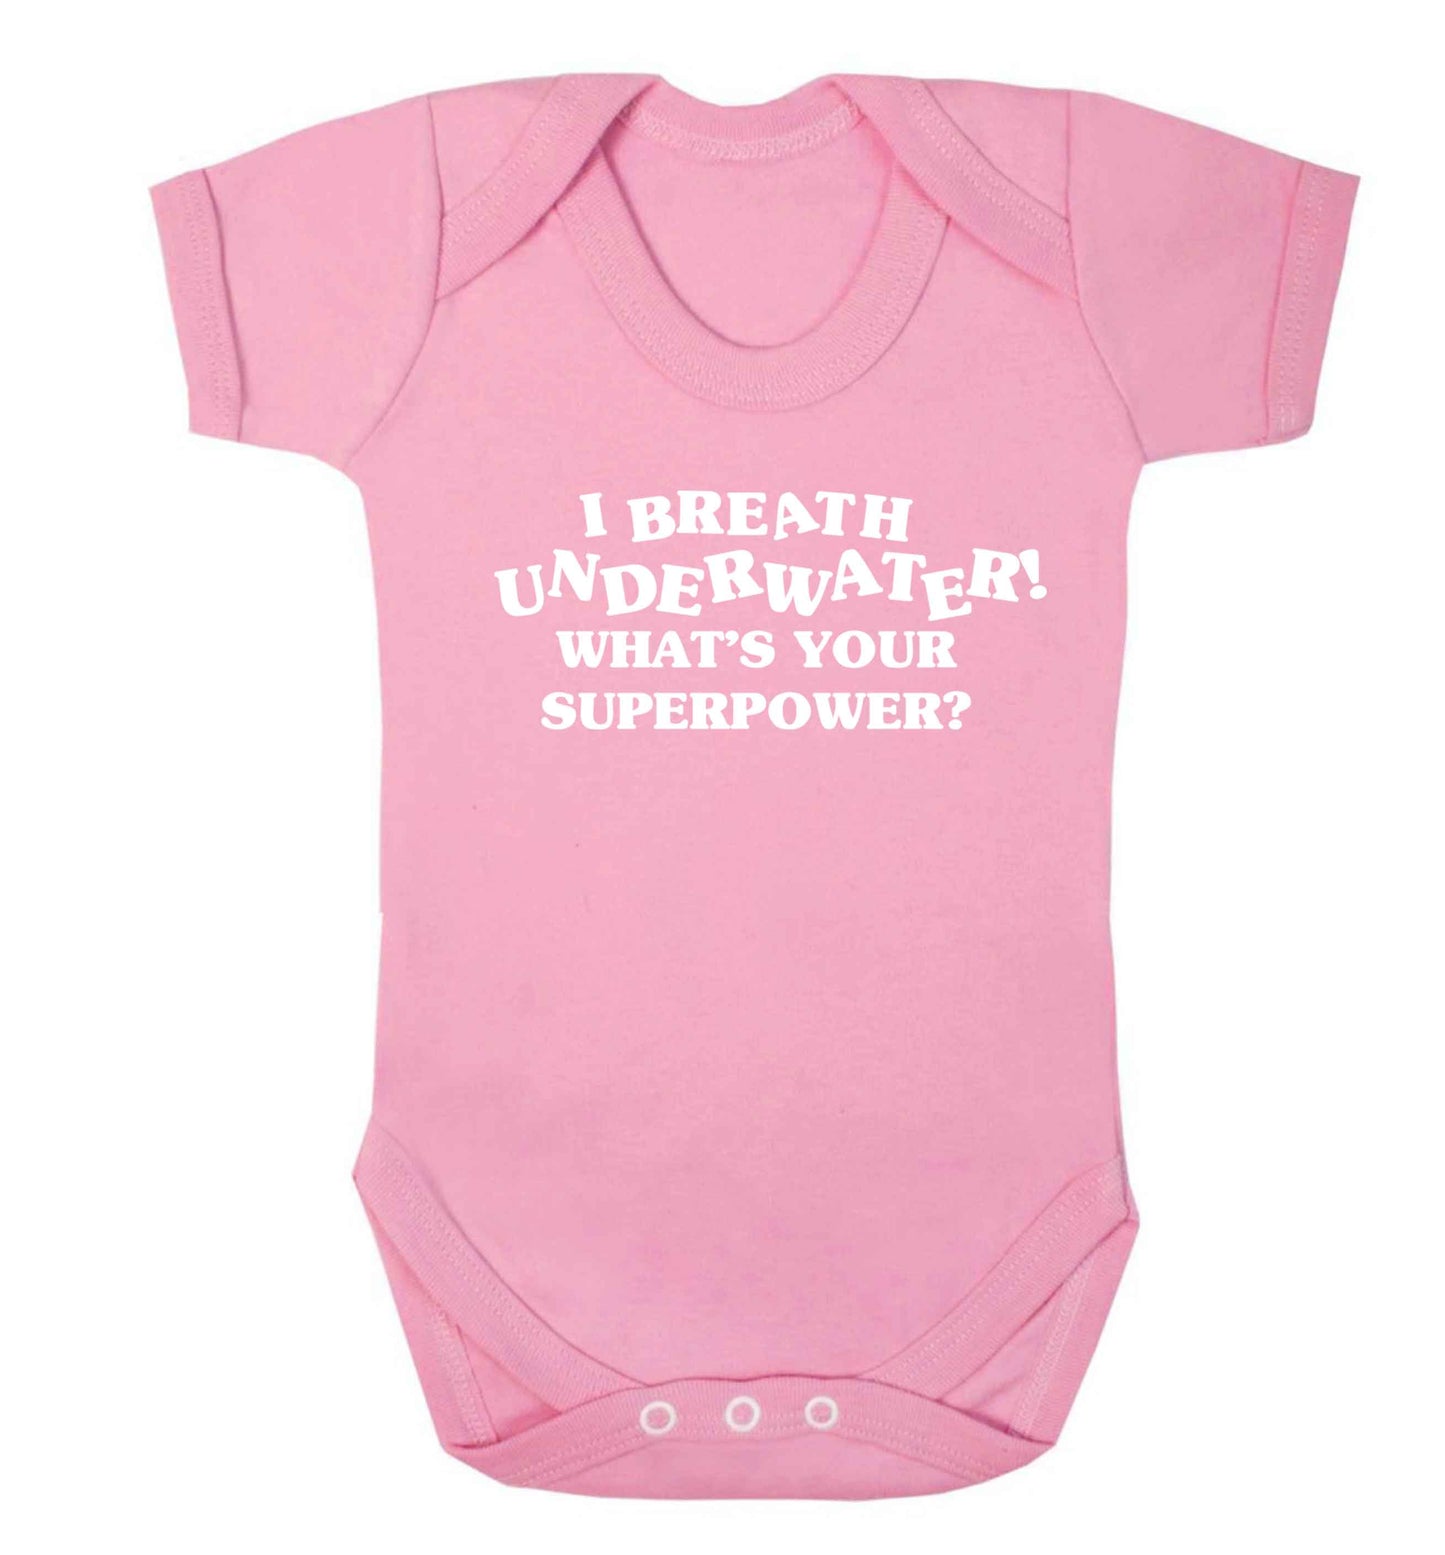 I breath underwater what's your superpower? Baby Vest pale pink 18-24 months